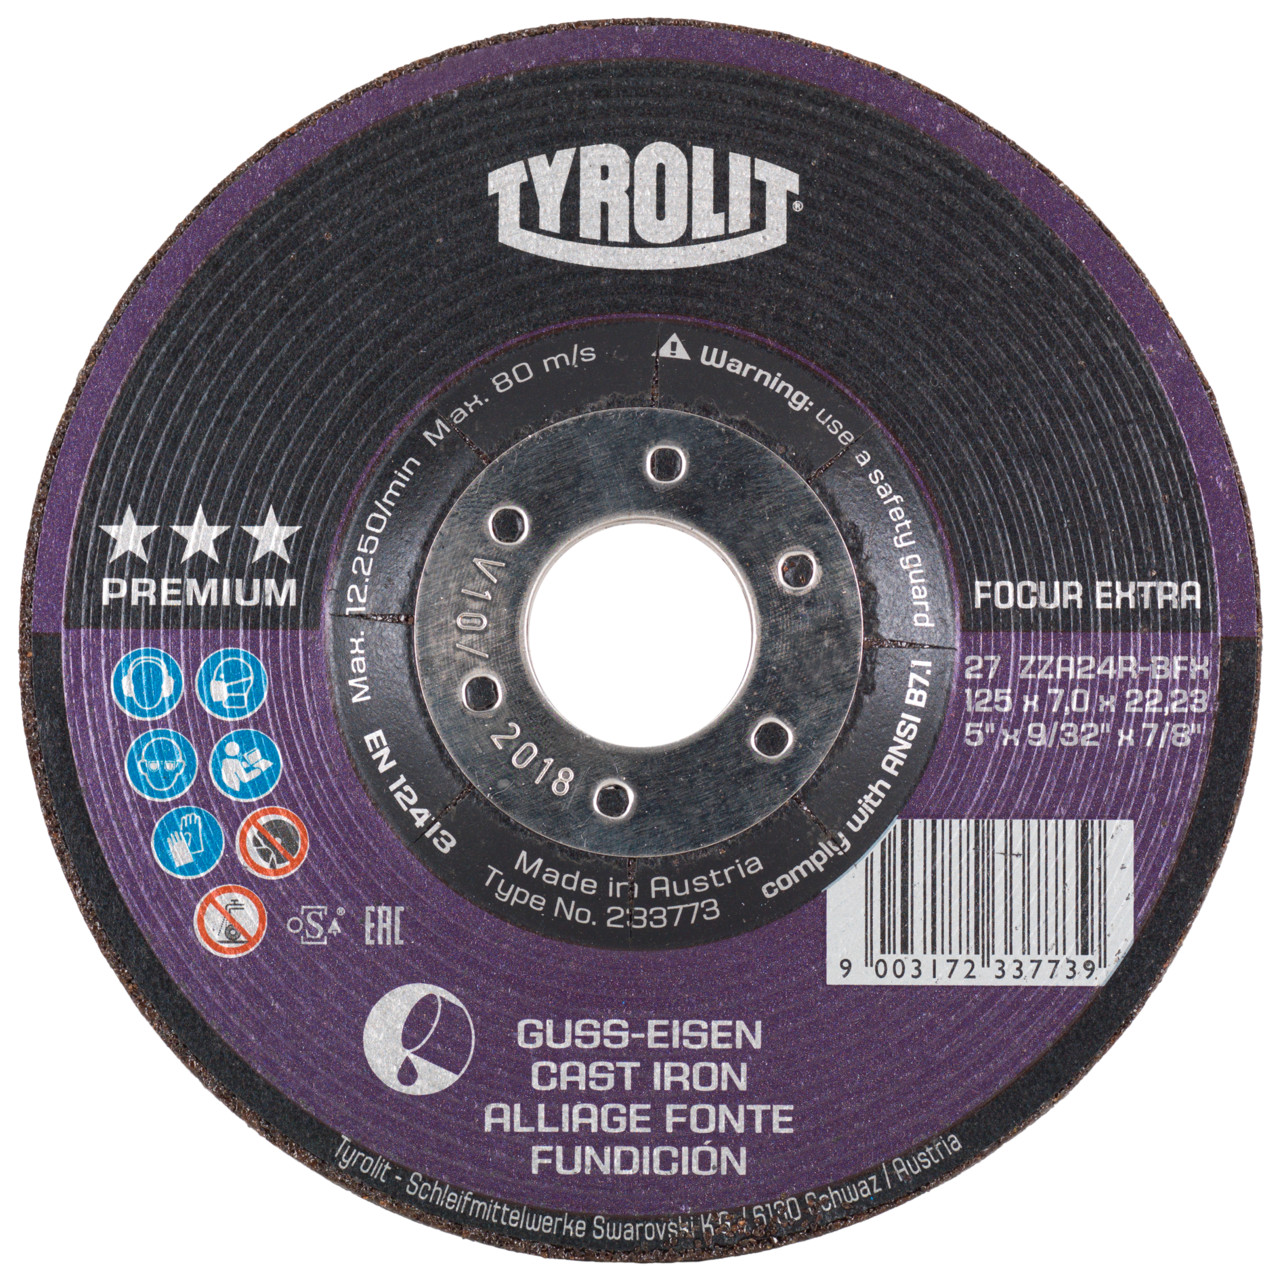 Tyrolit Roughing disc DxUxH 230x7x22.23 FOCUR Extra for cast iron, shape: 27 - offset version, Art. 233771